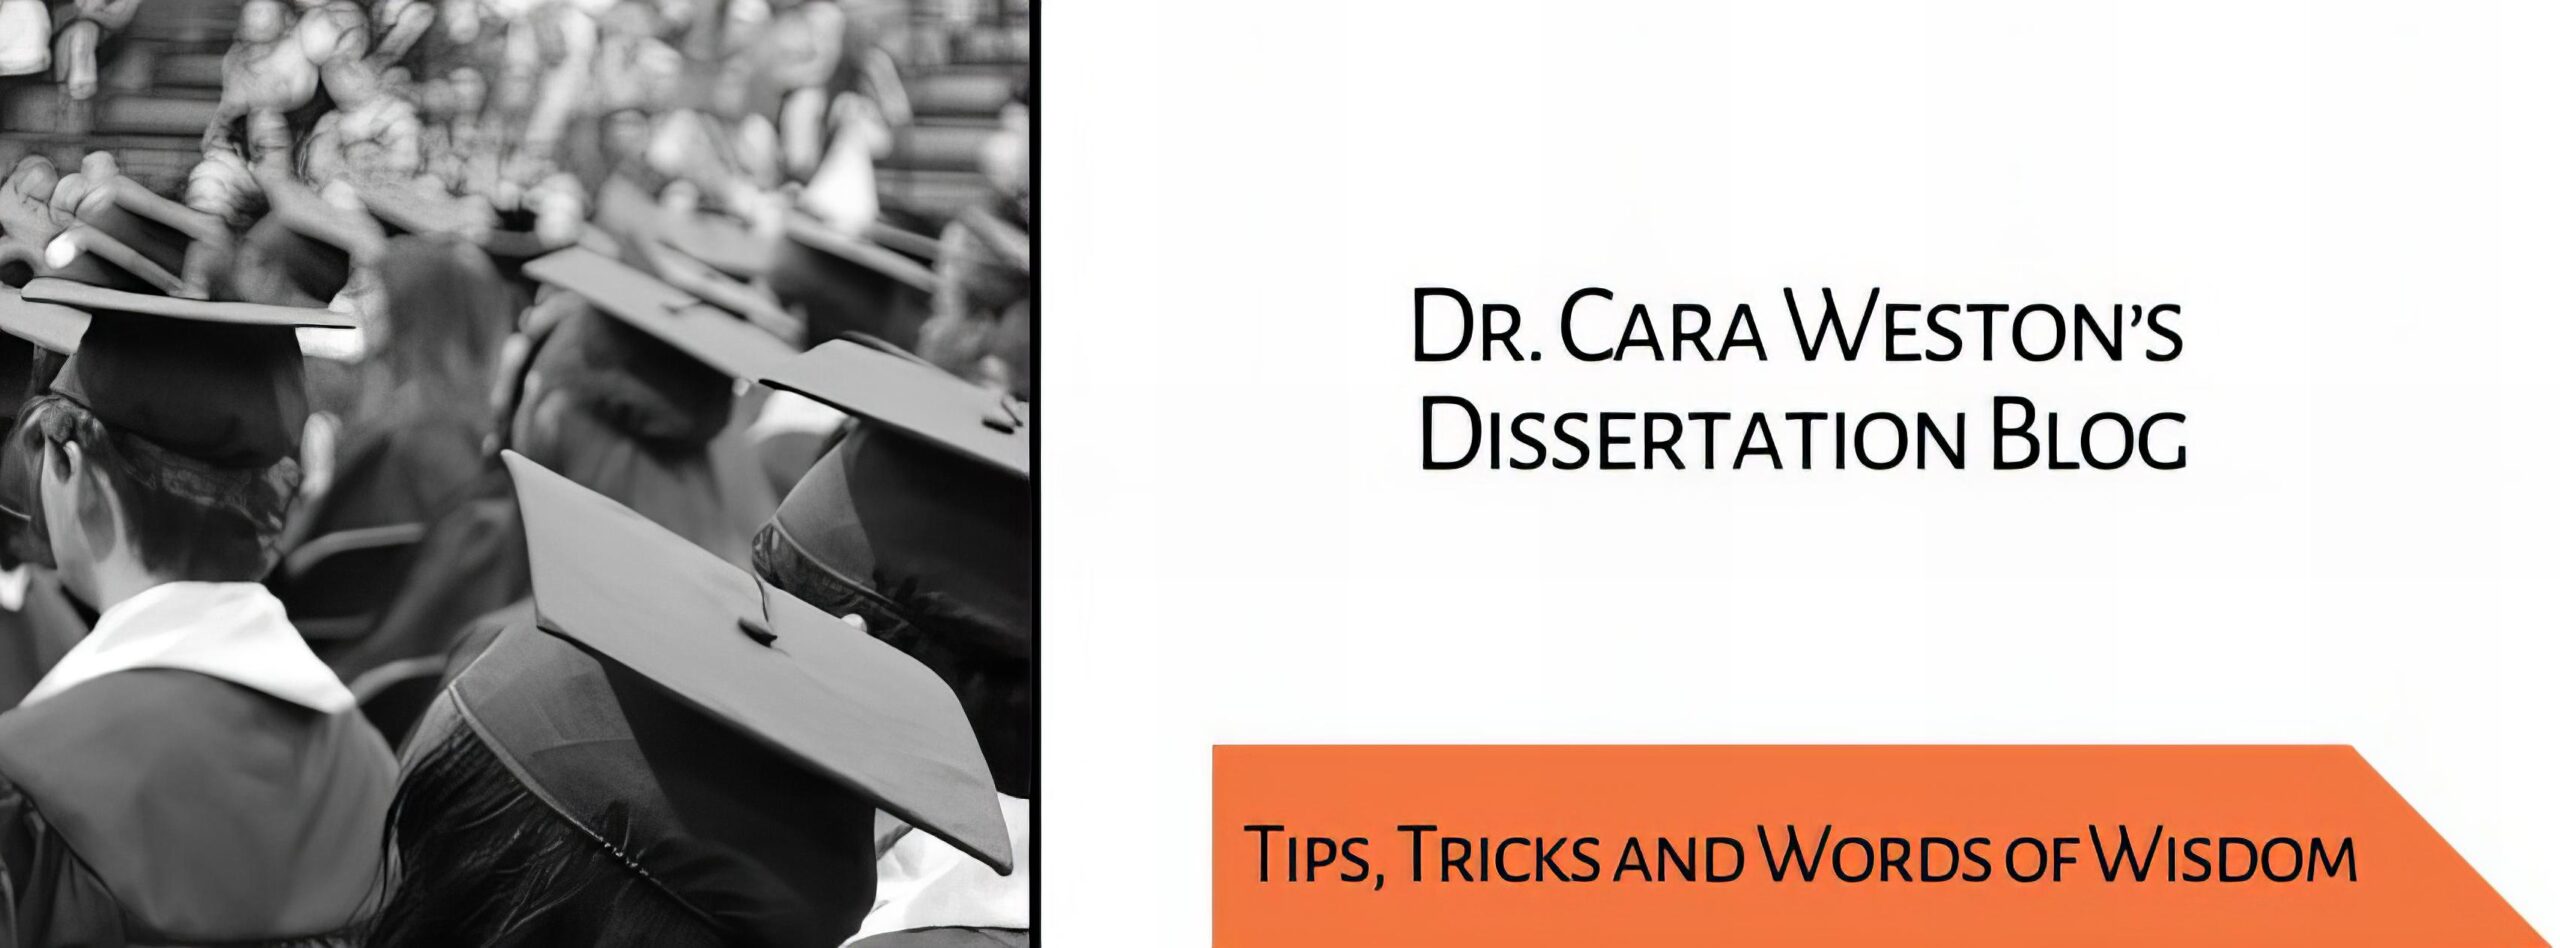 dissertation coach dr. cara weston blog